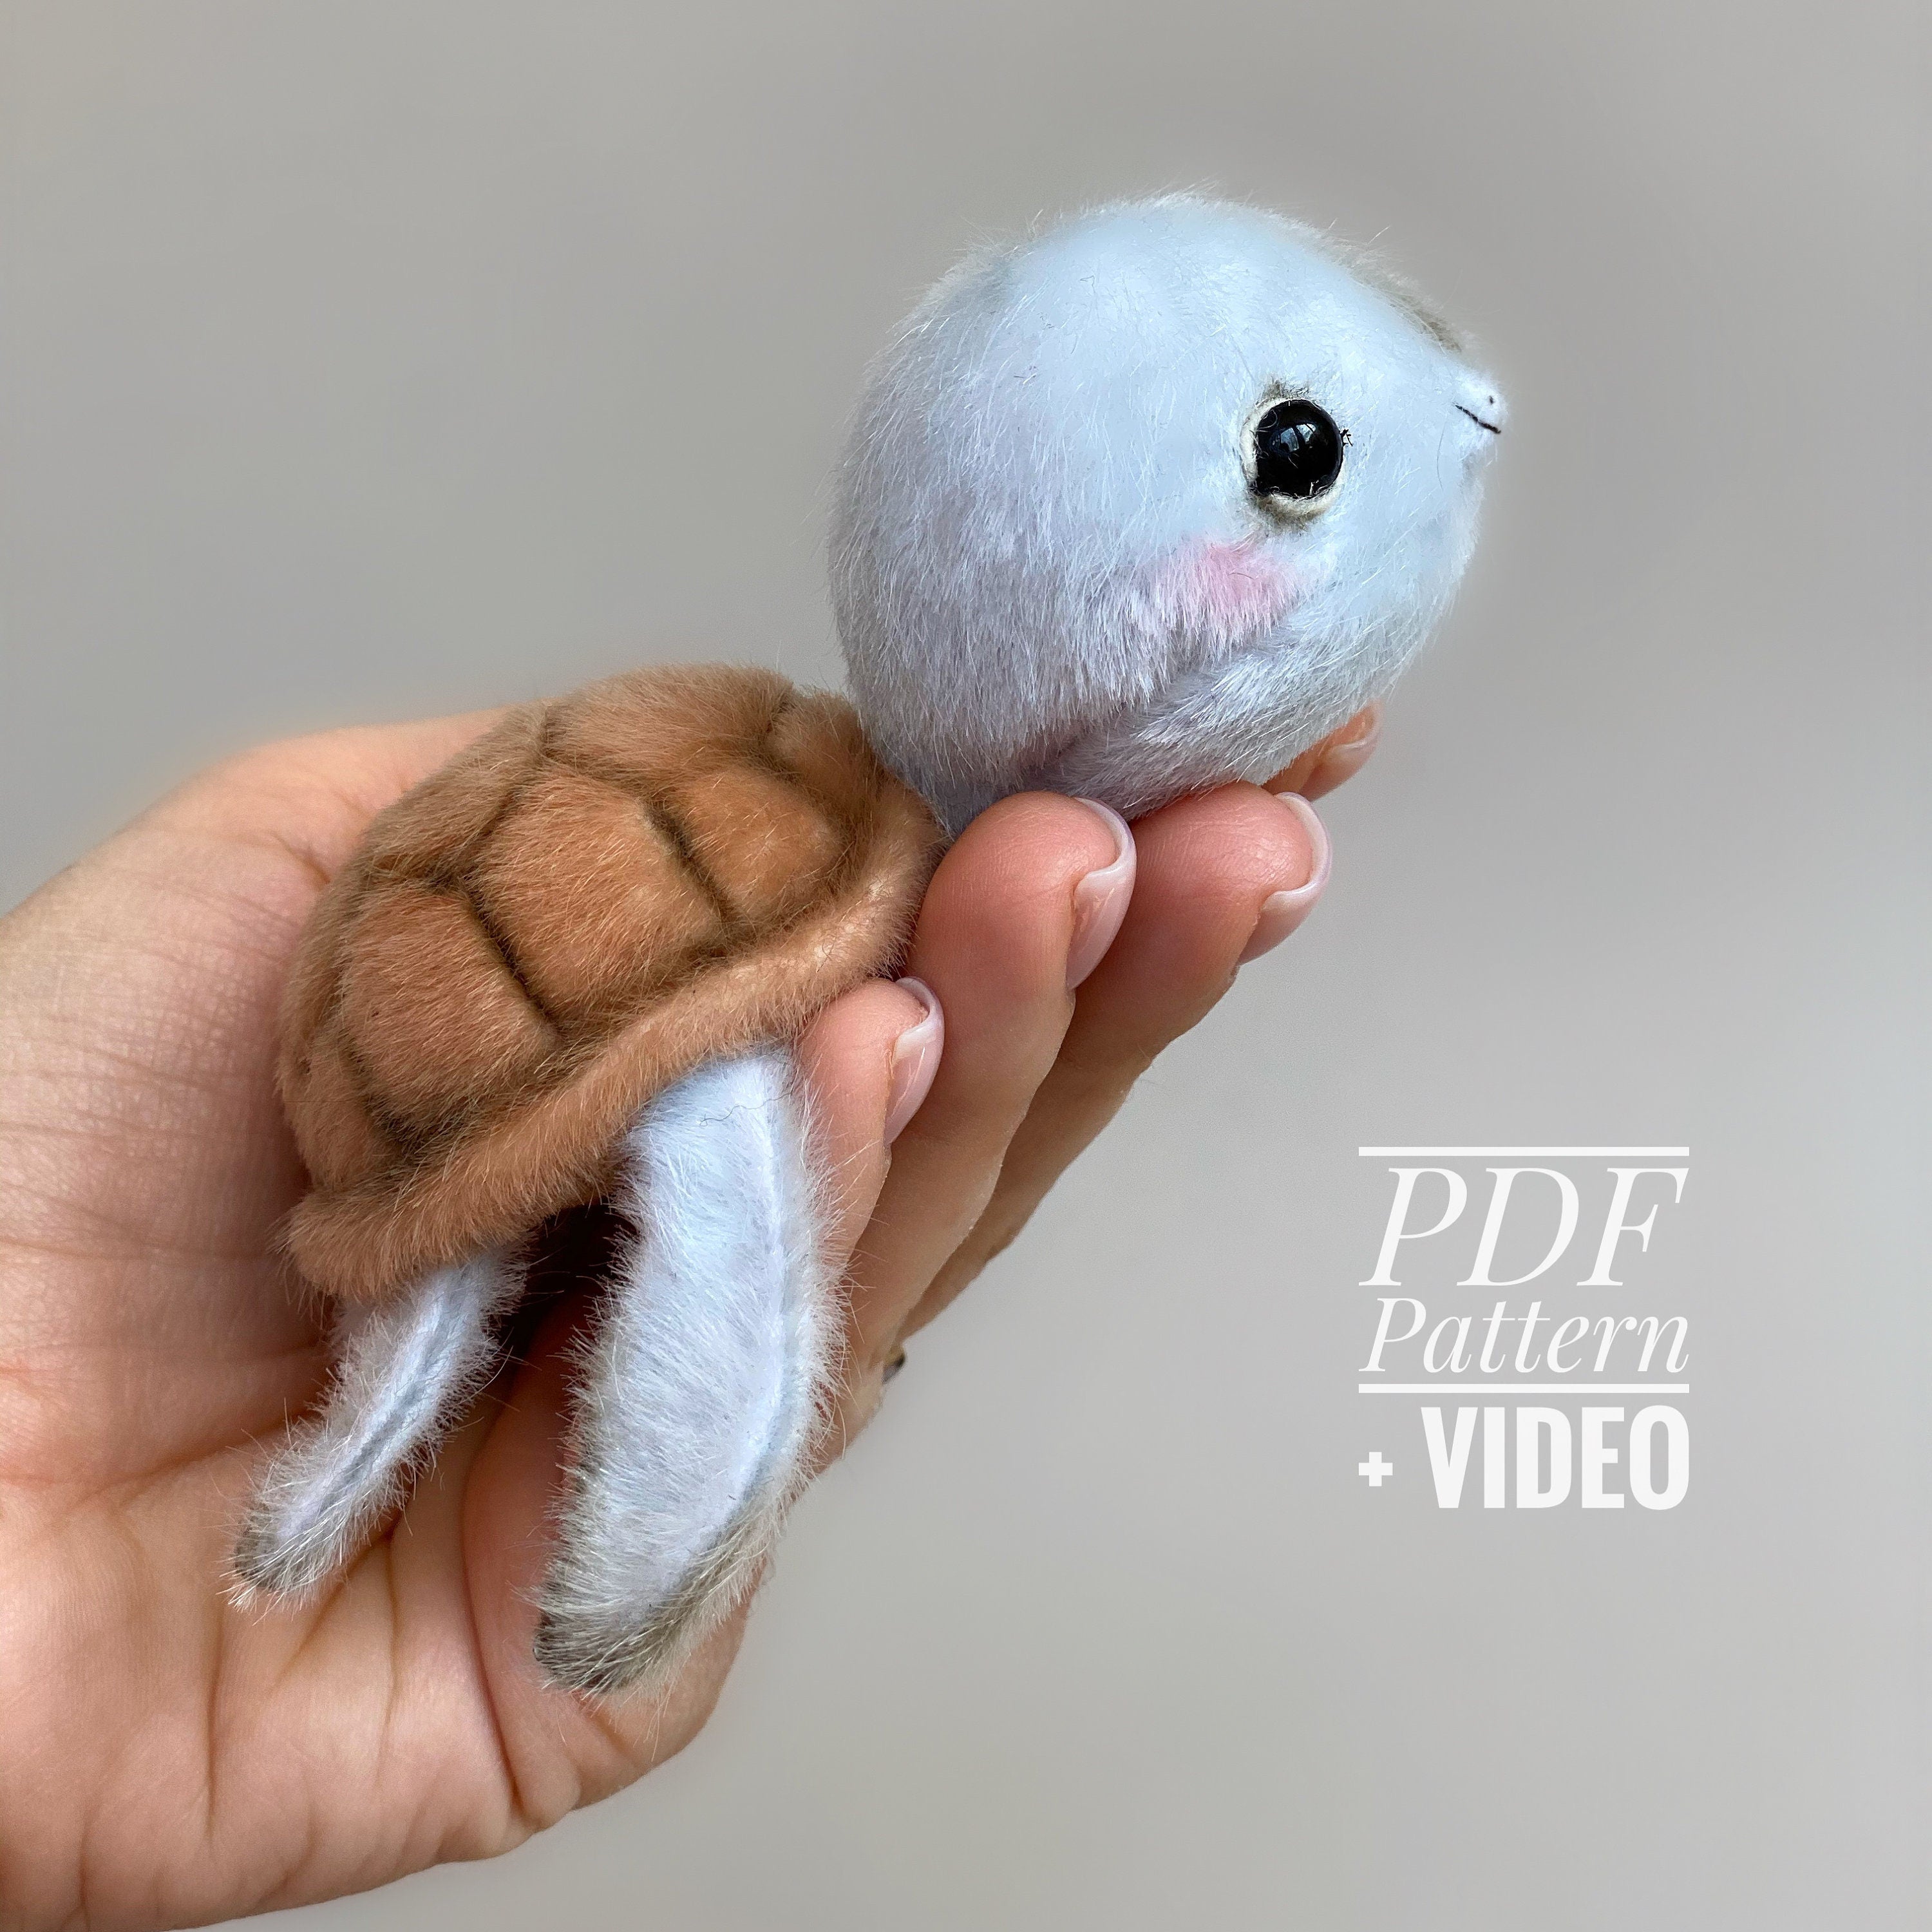 Turtle tortoise PDF sewing pattern Video tutorial DIY stuffed toy pattern DIY toy kids toy pattern easy to sew for beginners TSminibears